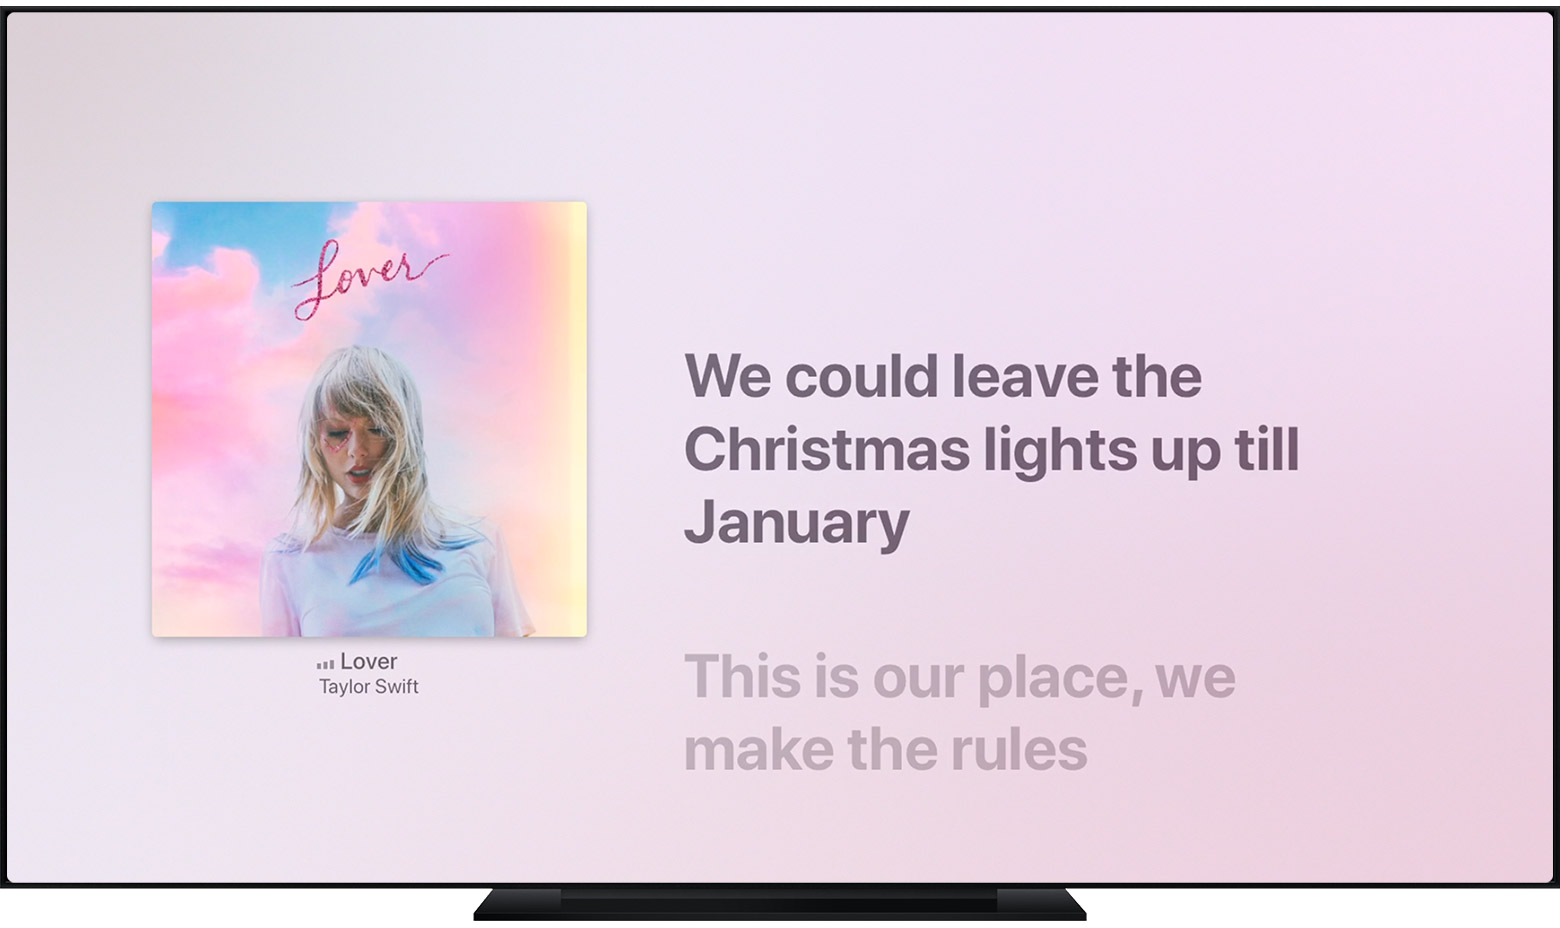 View Lyrics In Apple Music Apple Support